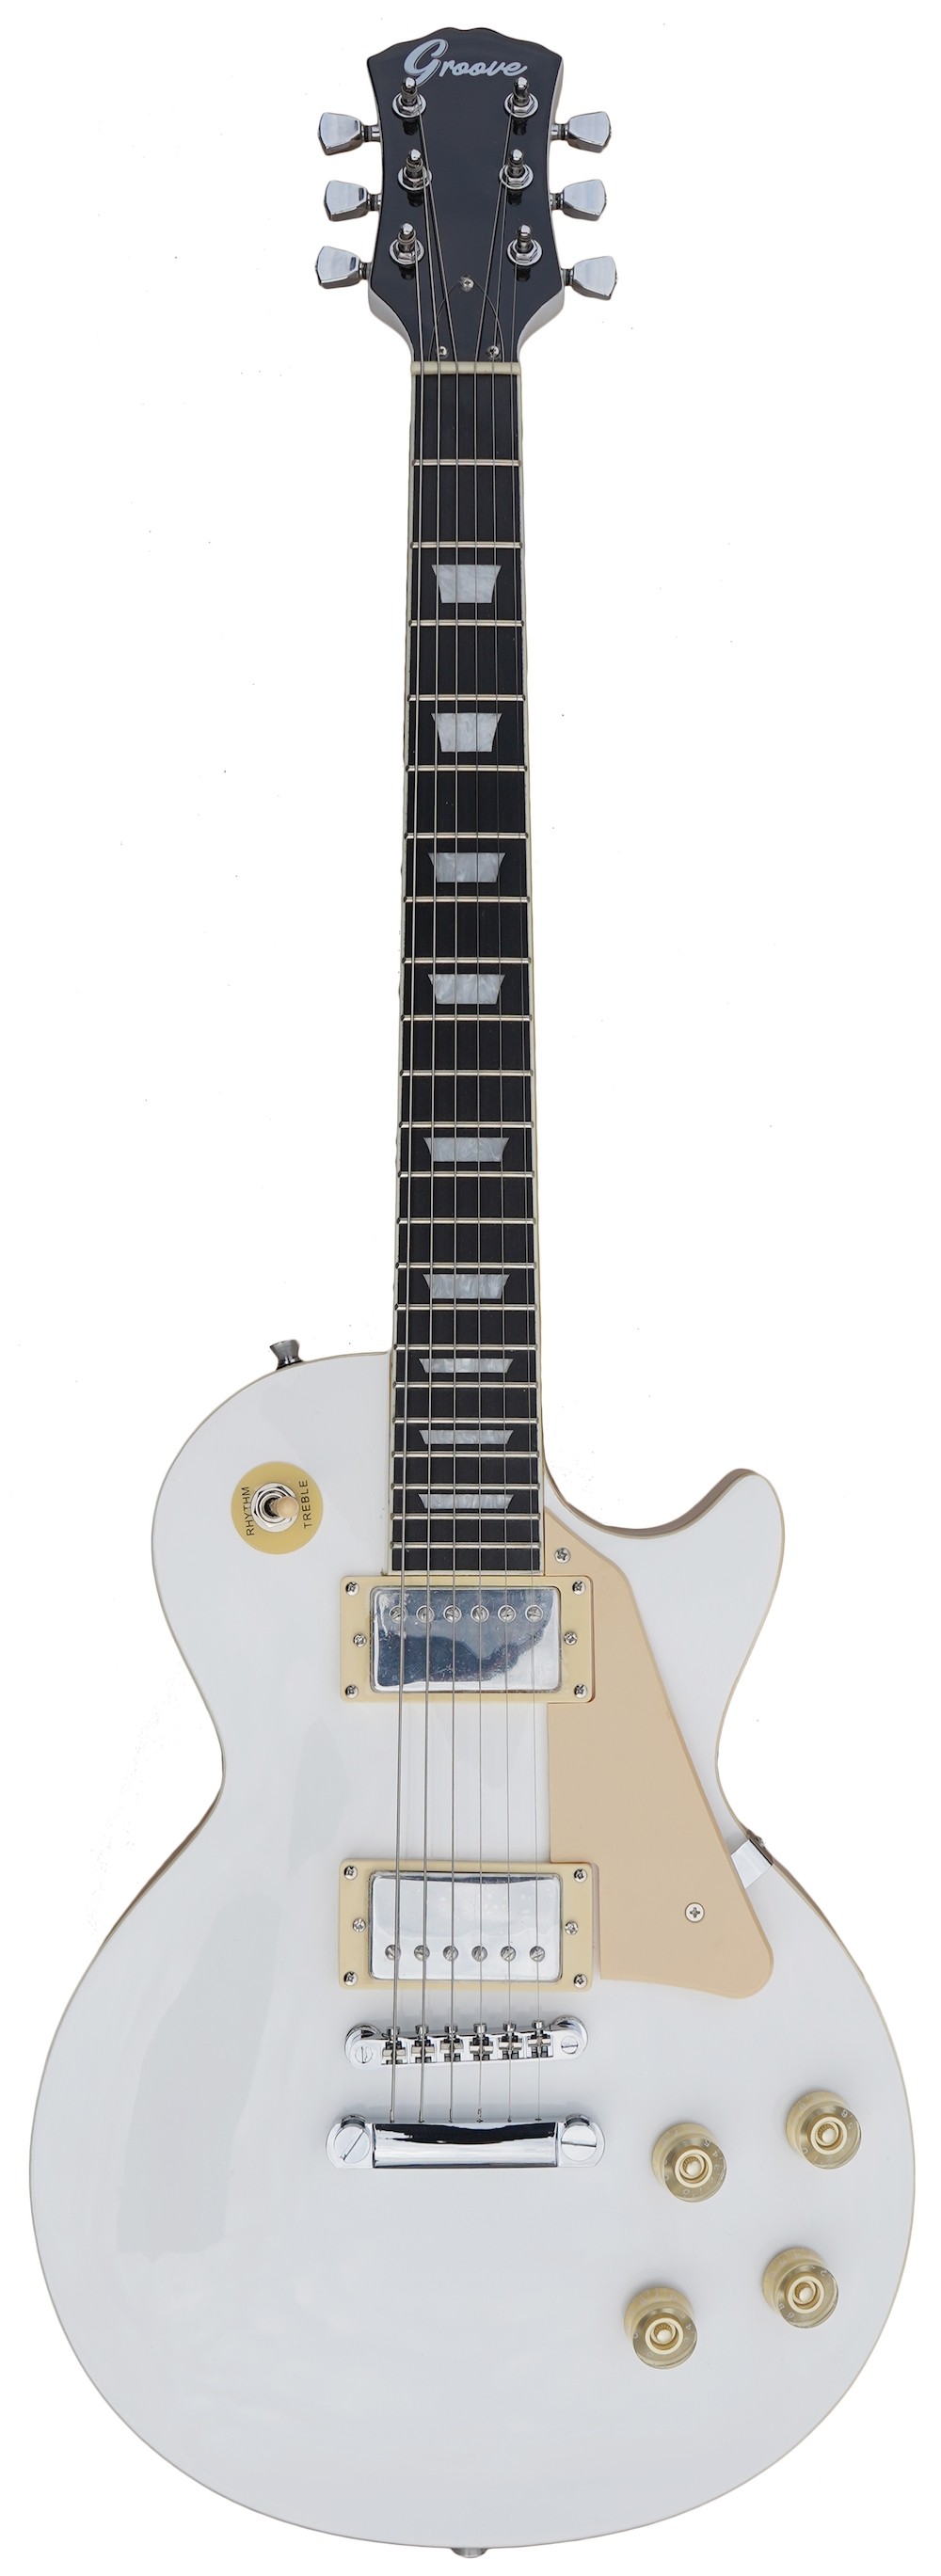 A Groove Lespaul Shaped Electric Guitar SET-Neck color WHITE